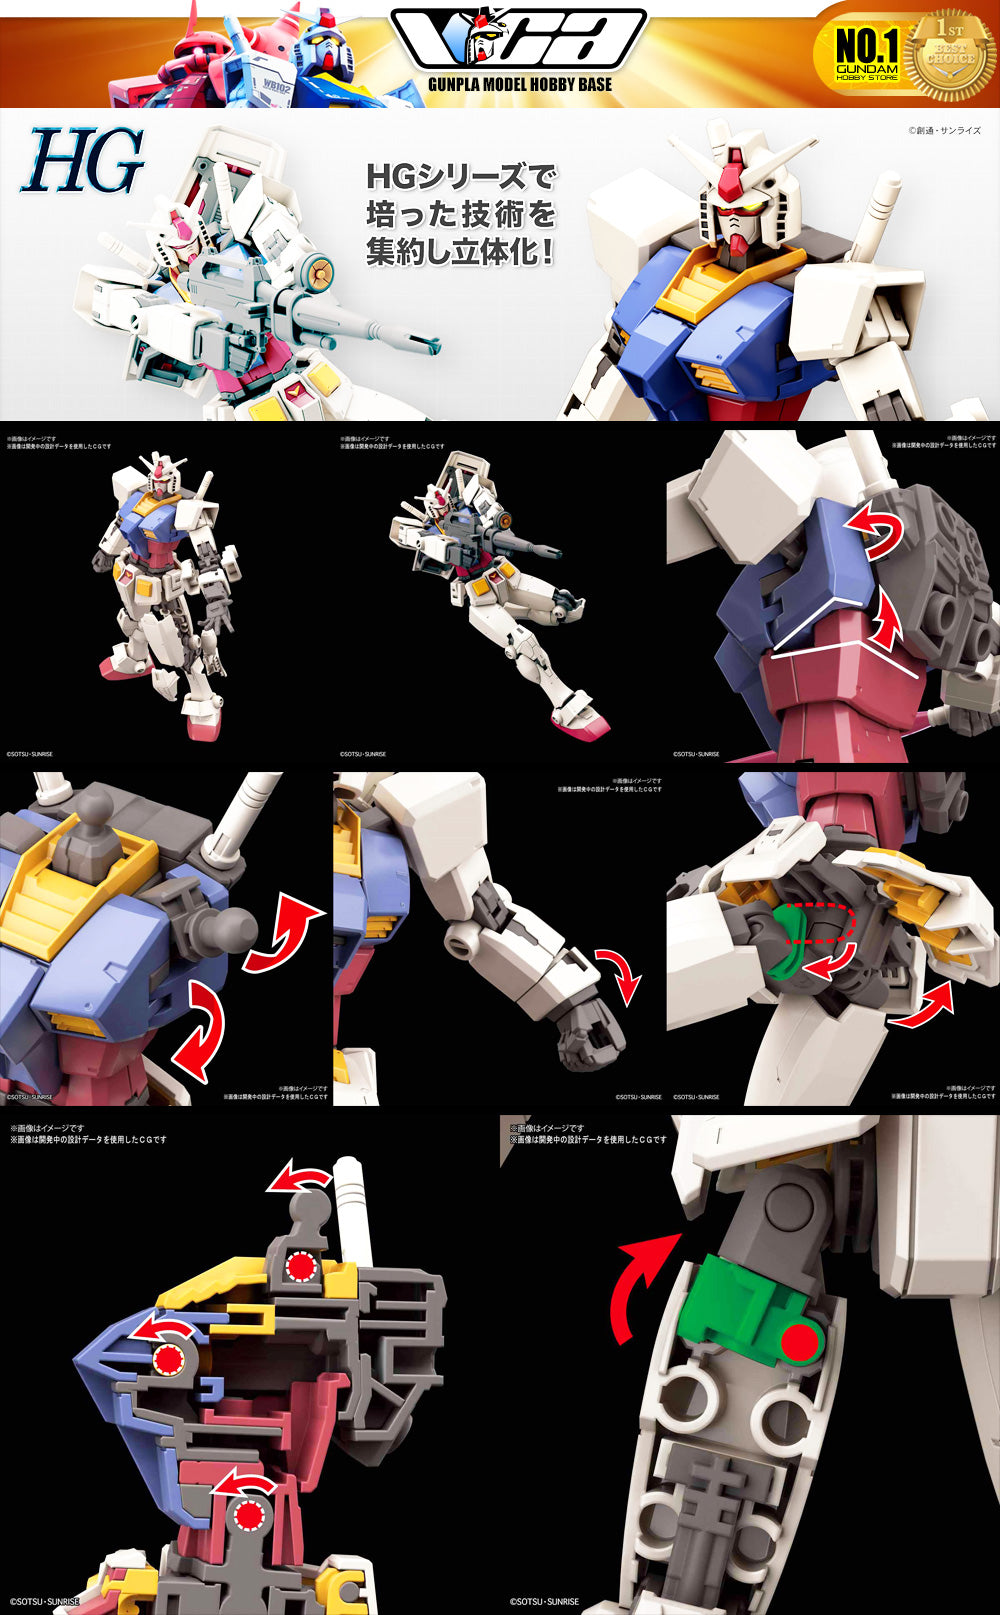 Bandai Gunpla High Grade 1/144 HG RX-78-2 Gundam Beyond Global Plastic Model Action Toy VCA Singapore